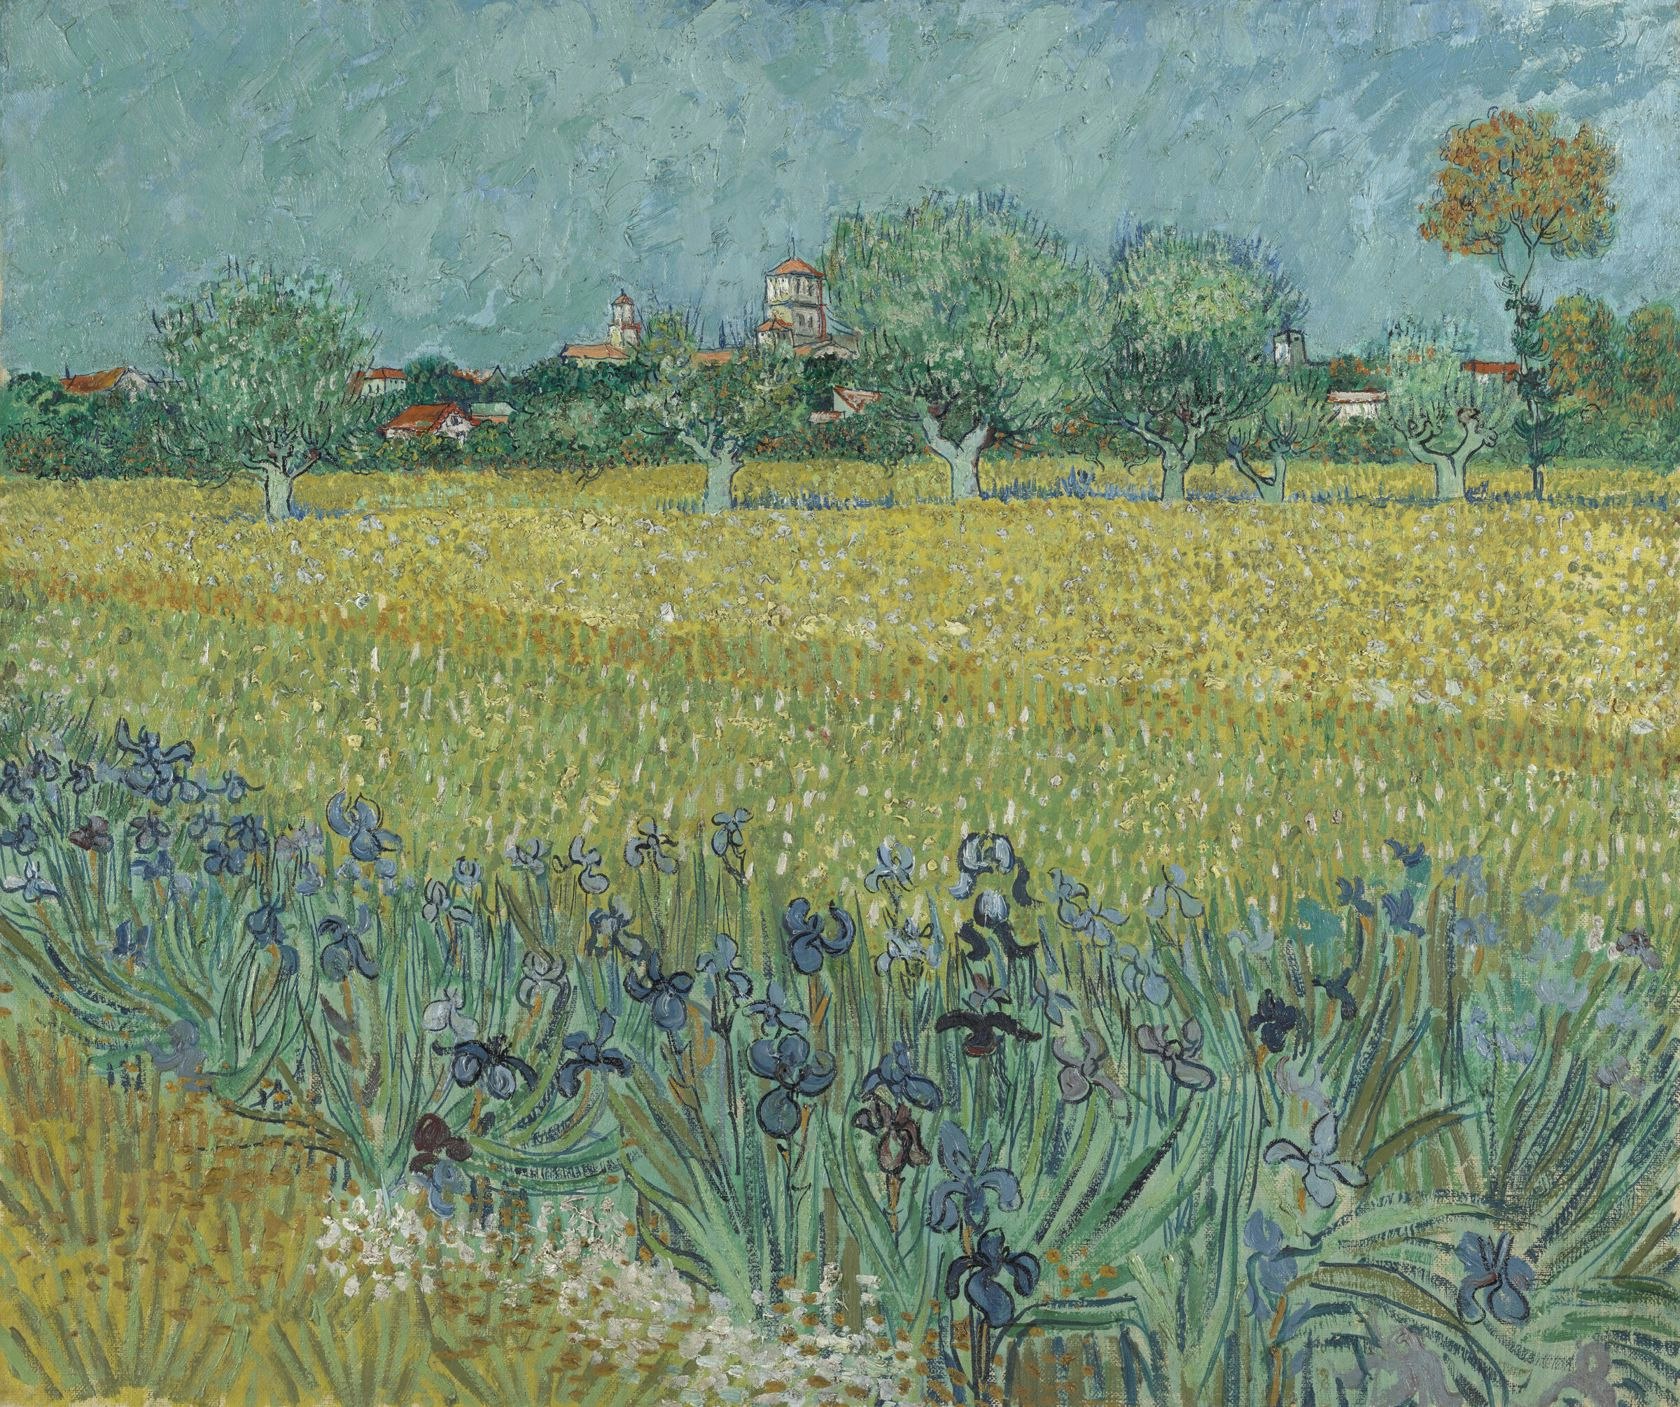 Van Gogh's Field with Irises near Arles painting